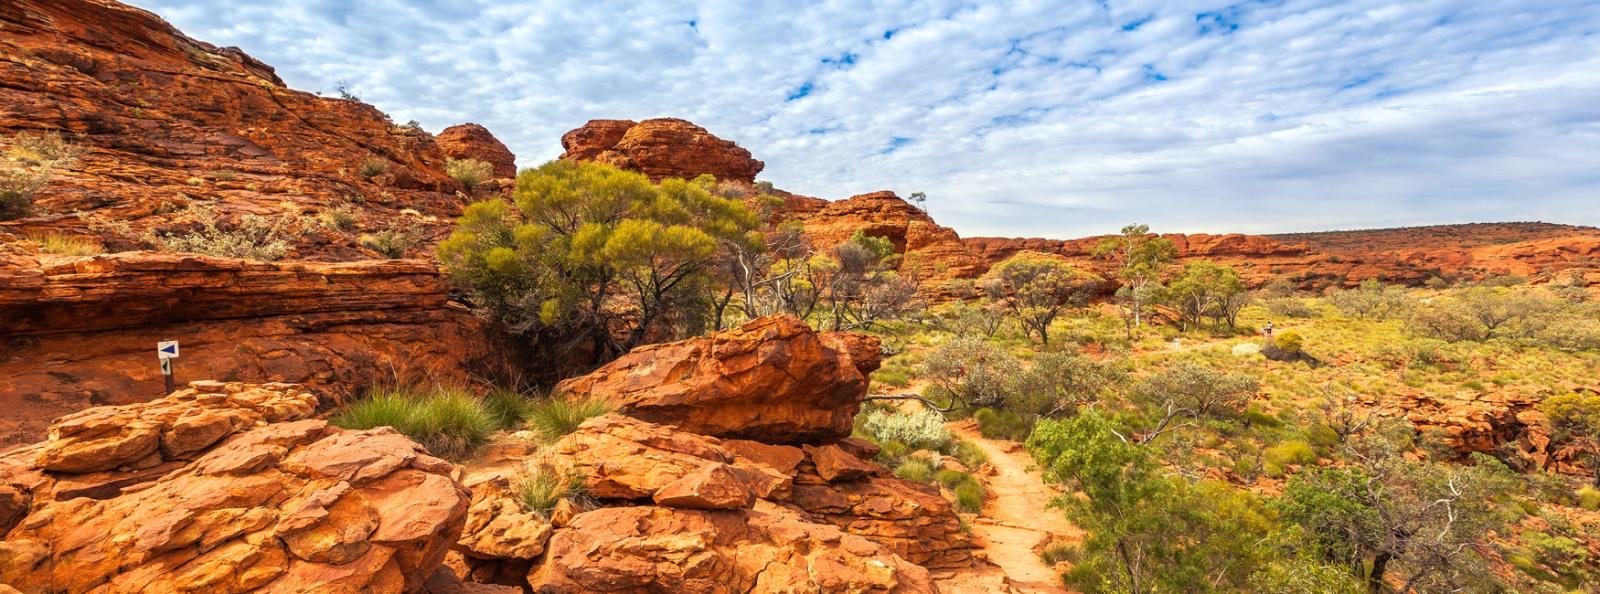 Outback Australia Itinerary